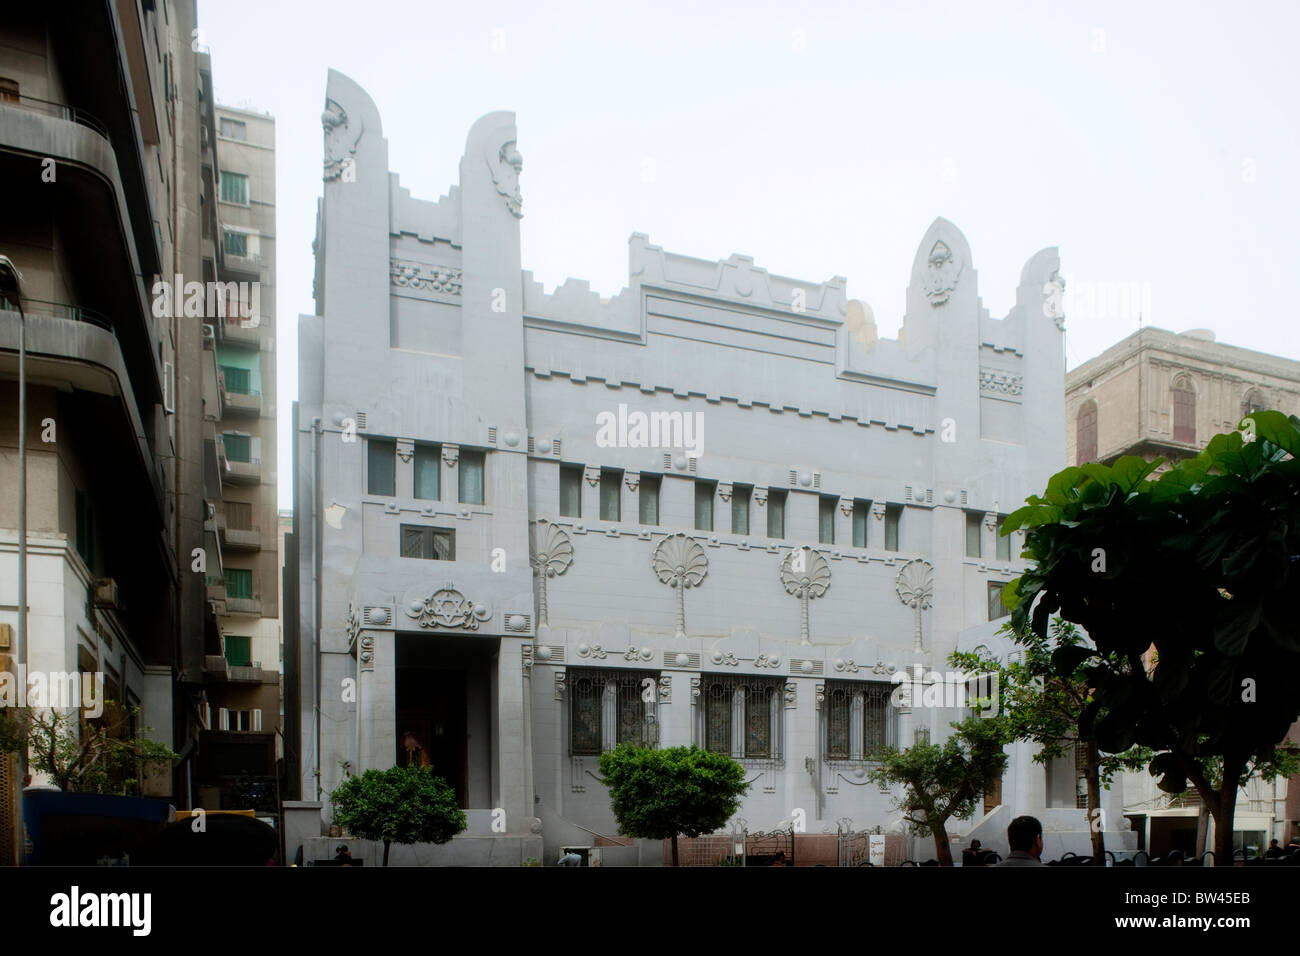 Aegypten, Kairo, la Sharia Adly, Synagoge Foto de stock